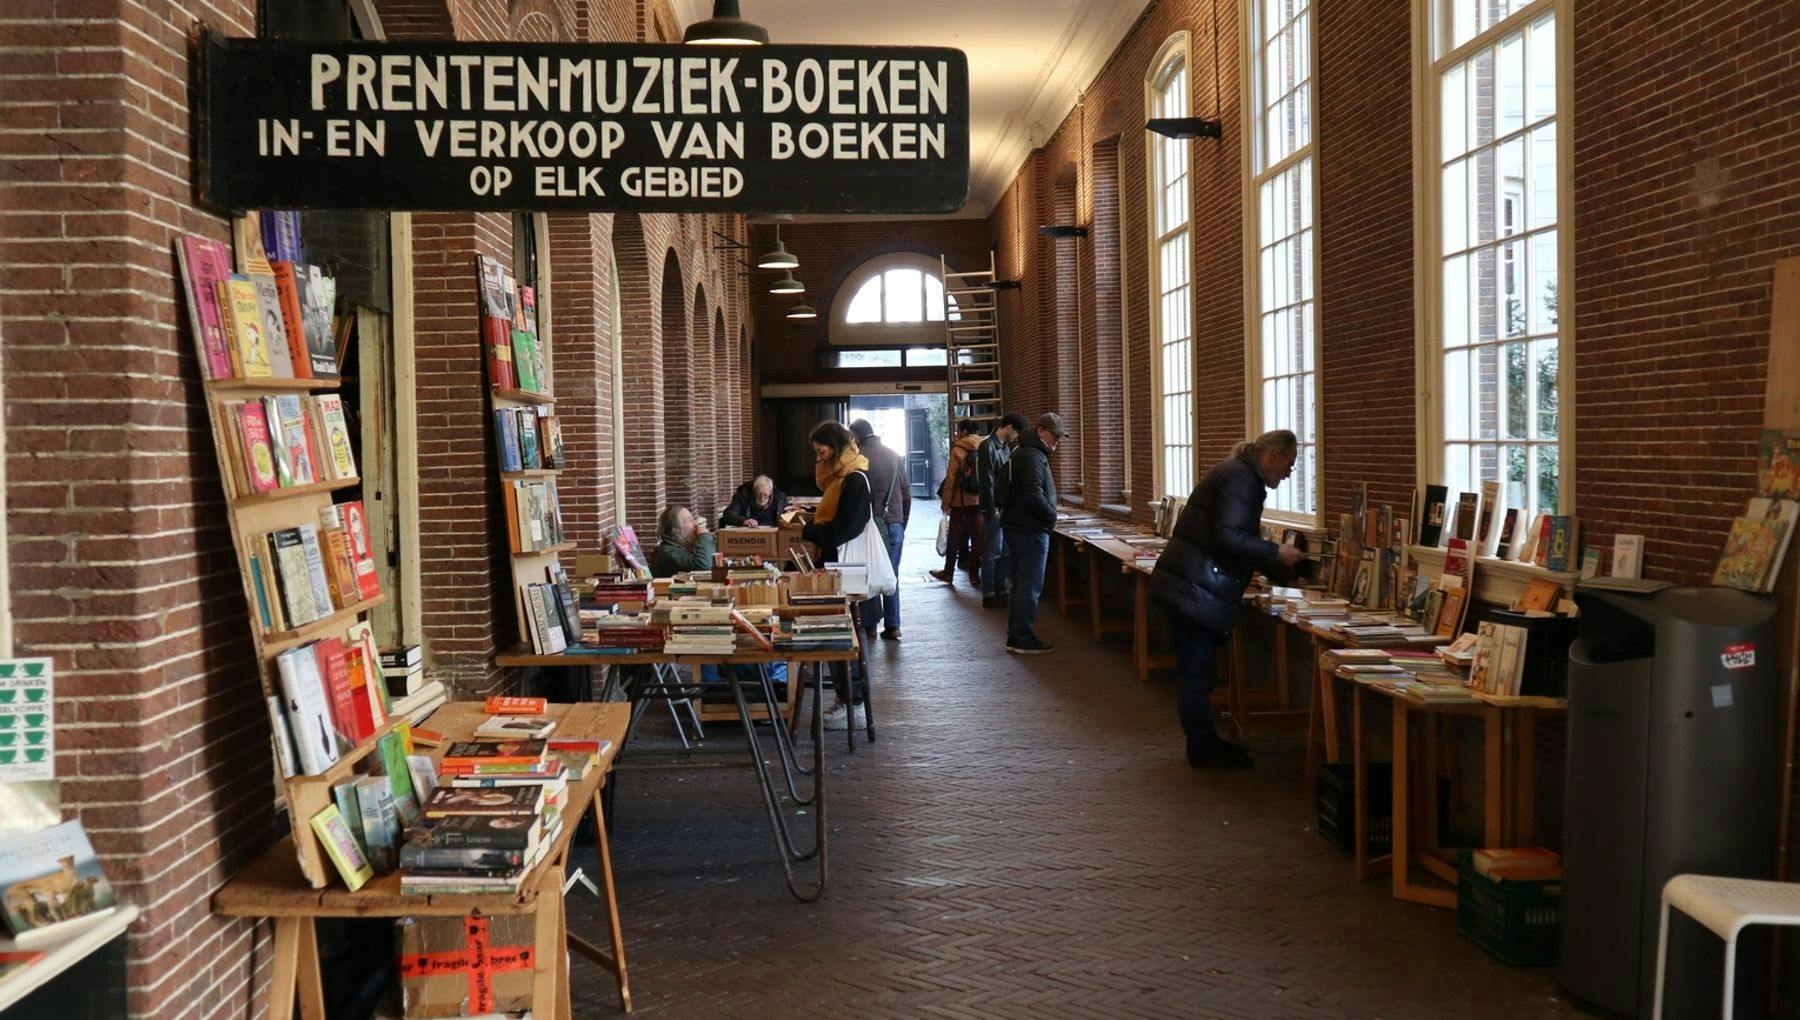 Book market in Amsterdam
2276047857
Oudemanhuispoort Book Market, University of Amsterdam. Shutterstock